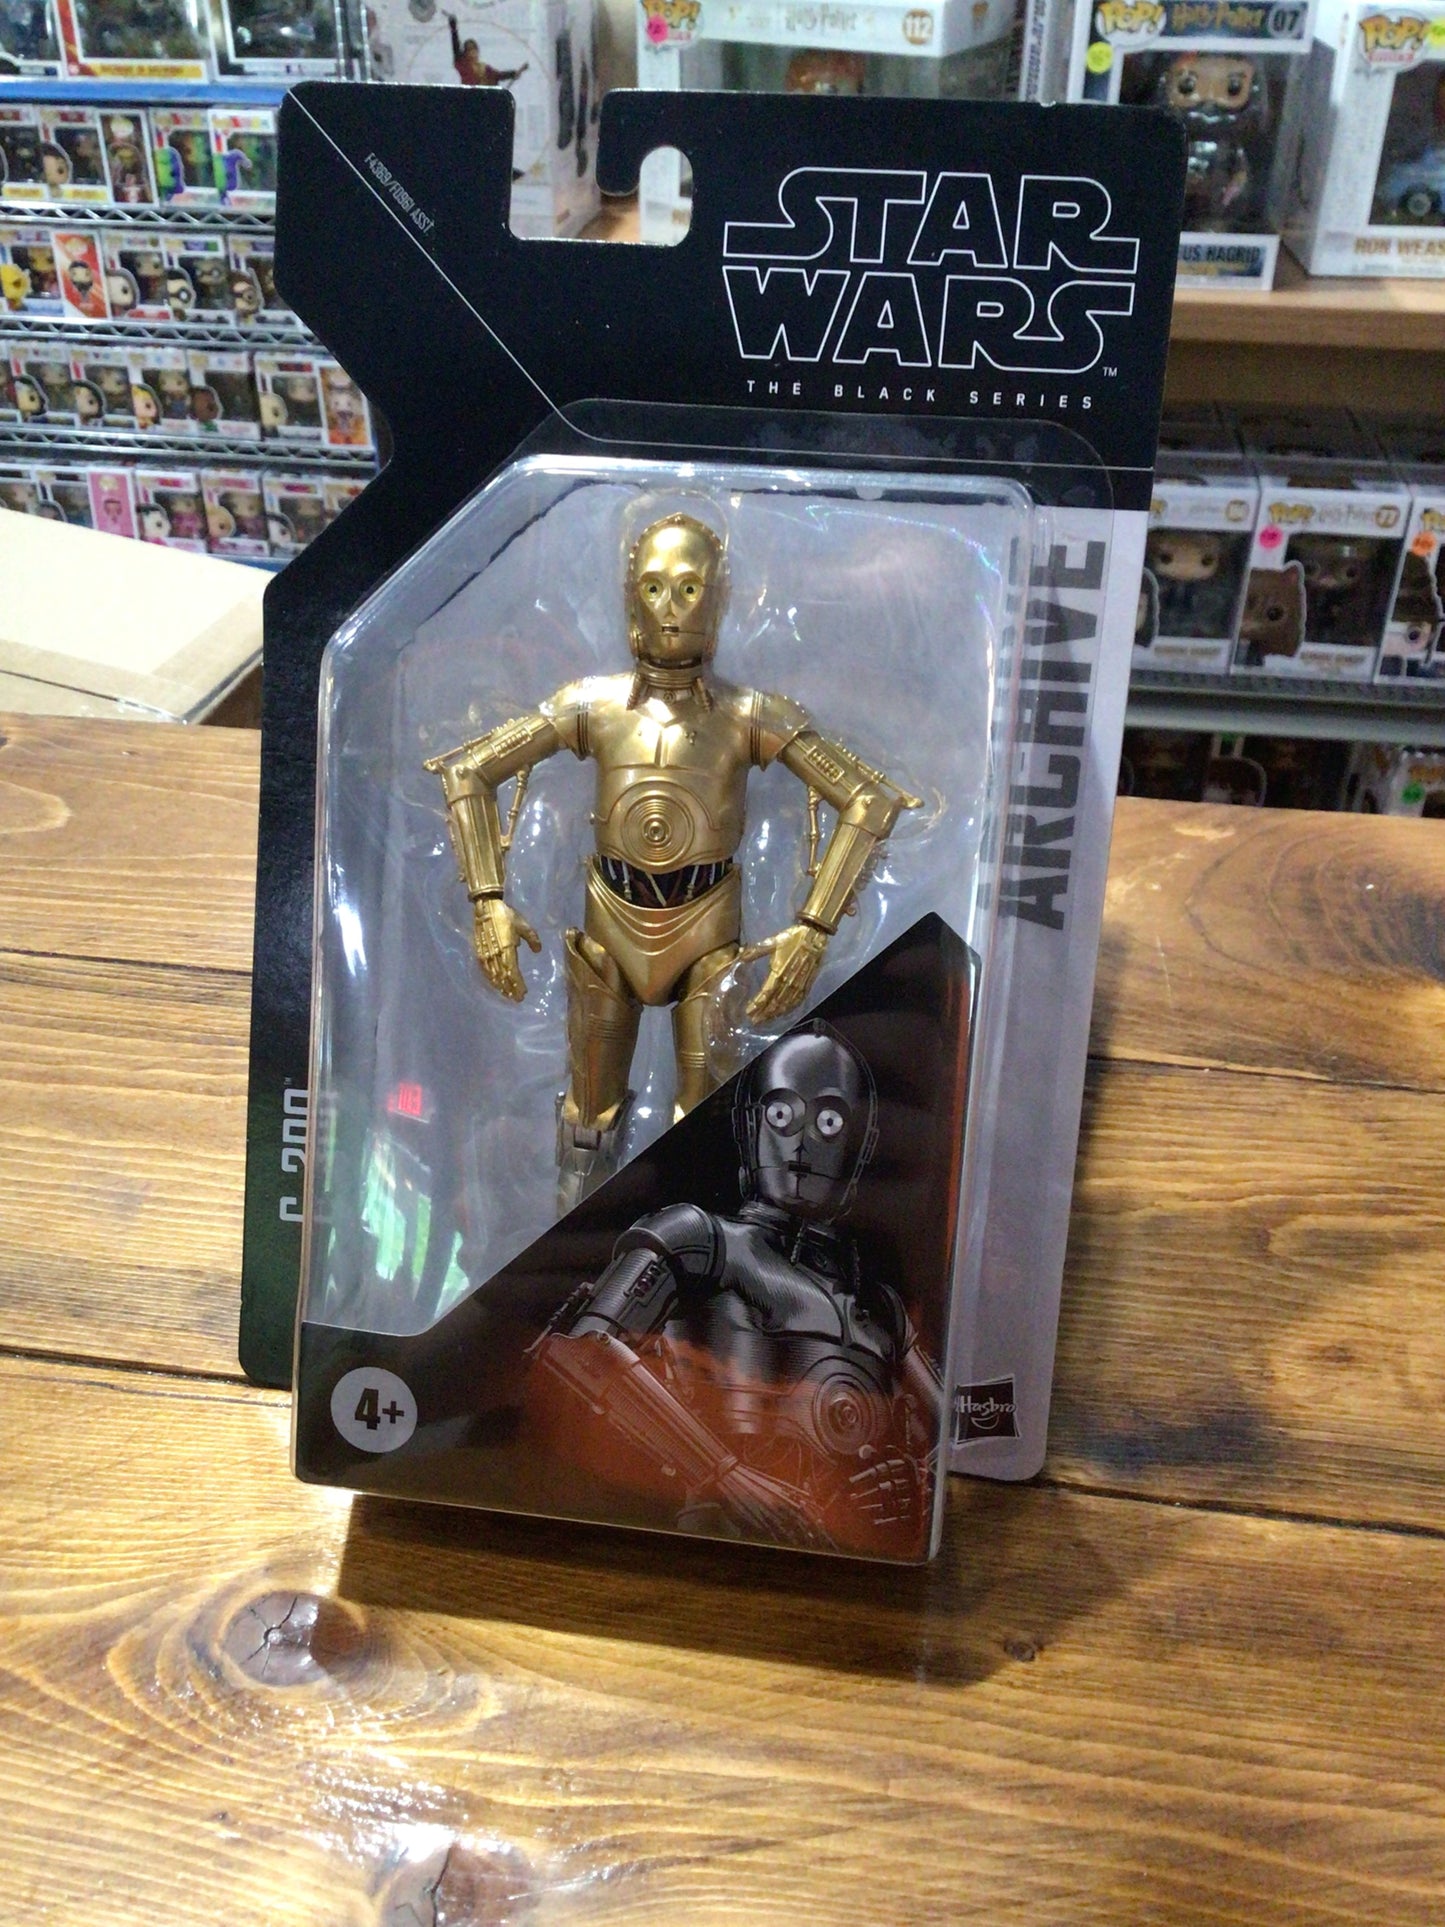 Star Wars Archives Black Series C-3PO Hasbro action figure